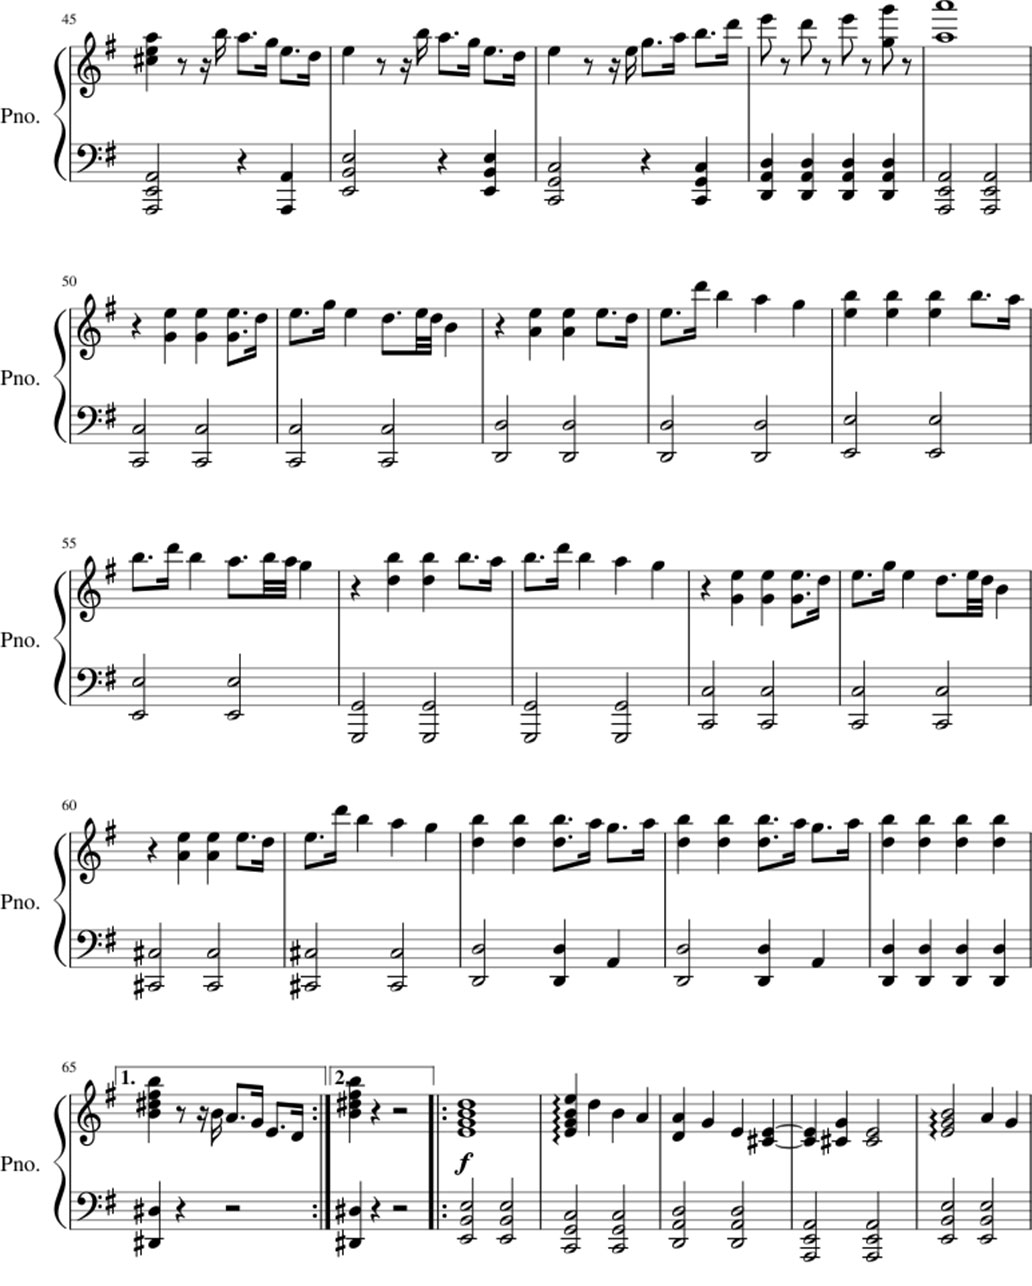 Unity sheet music notes 3